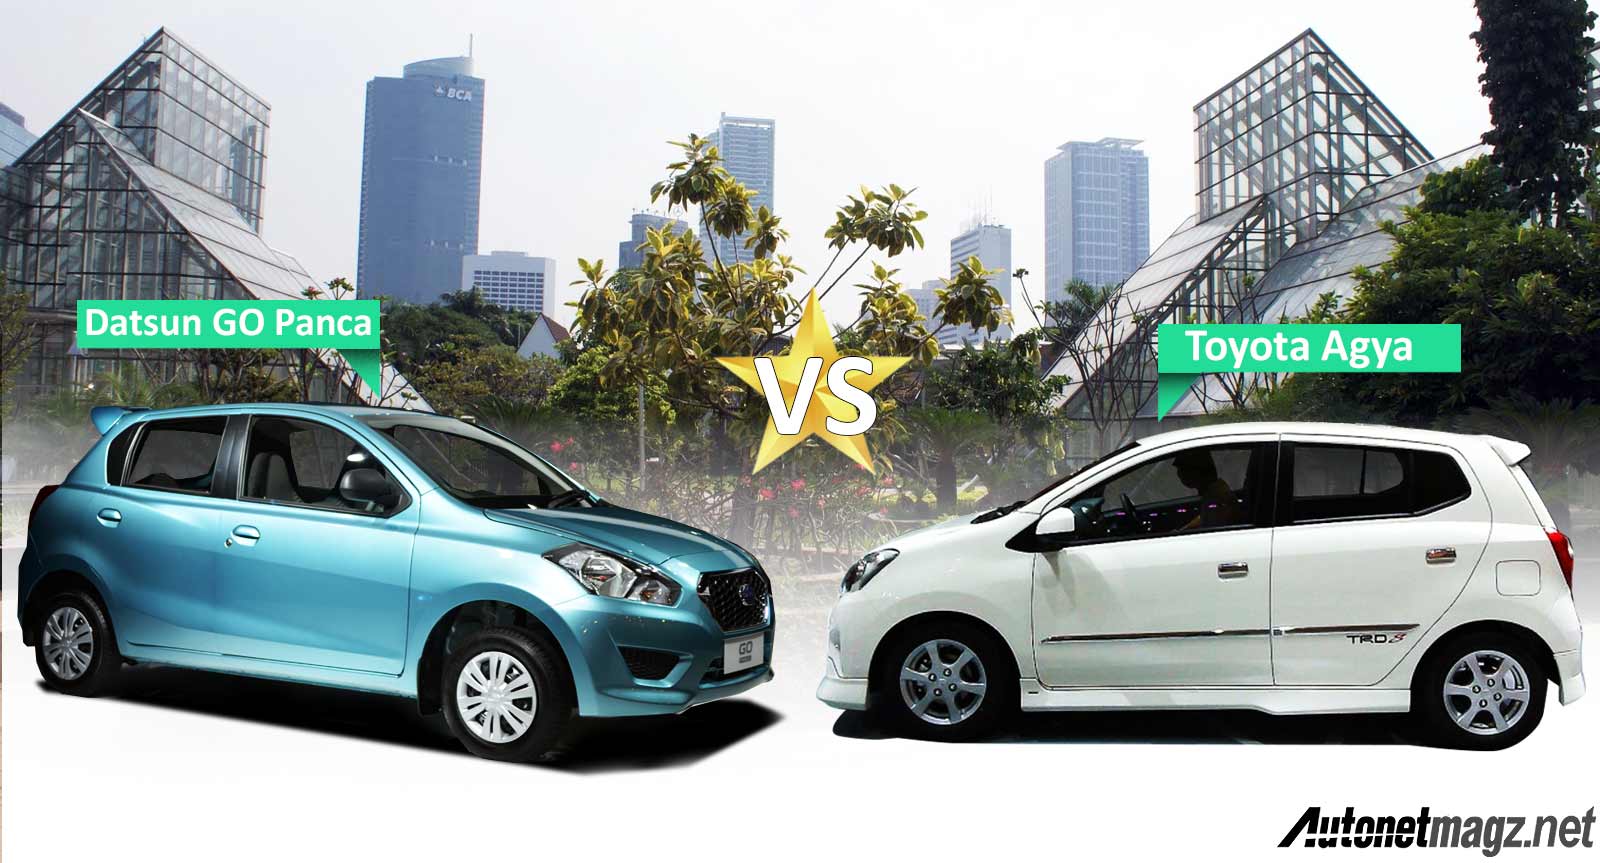 Komparasi Datsun GO Panca vs Toyota Agya - AutonetMagz